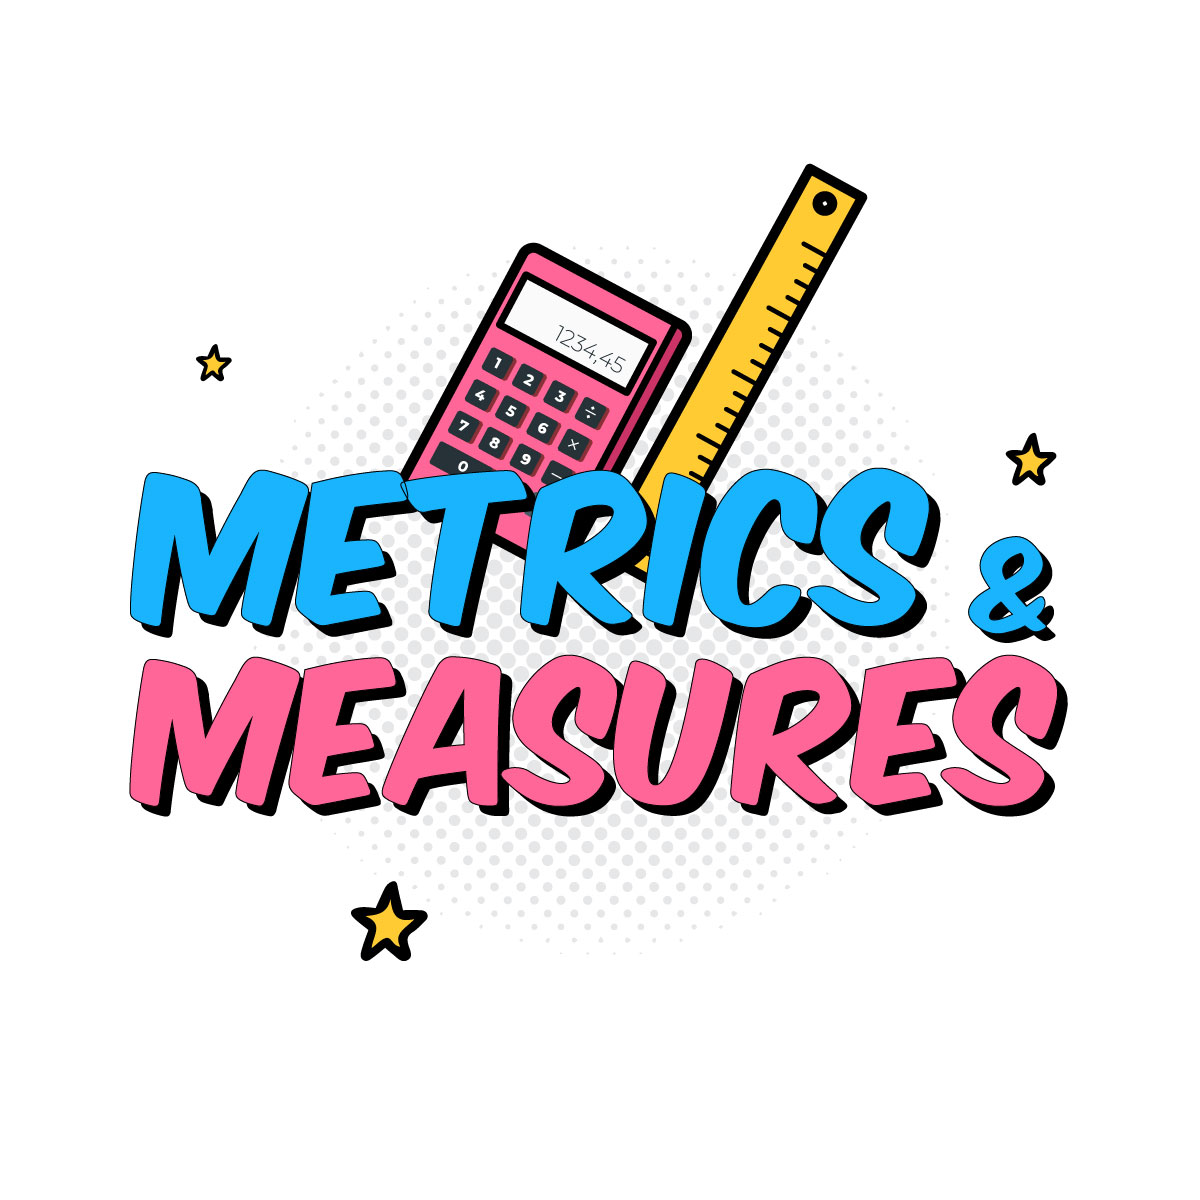 Metrics and Measures